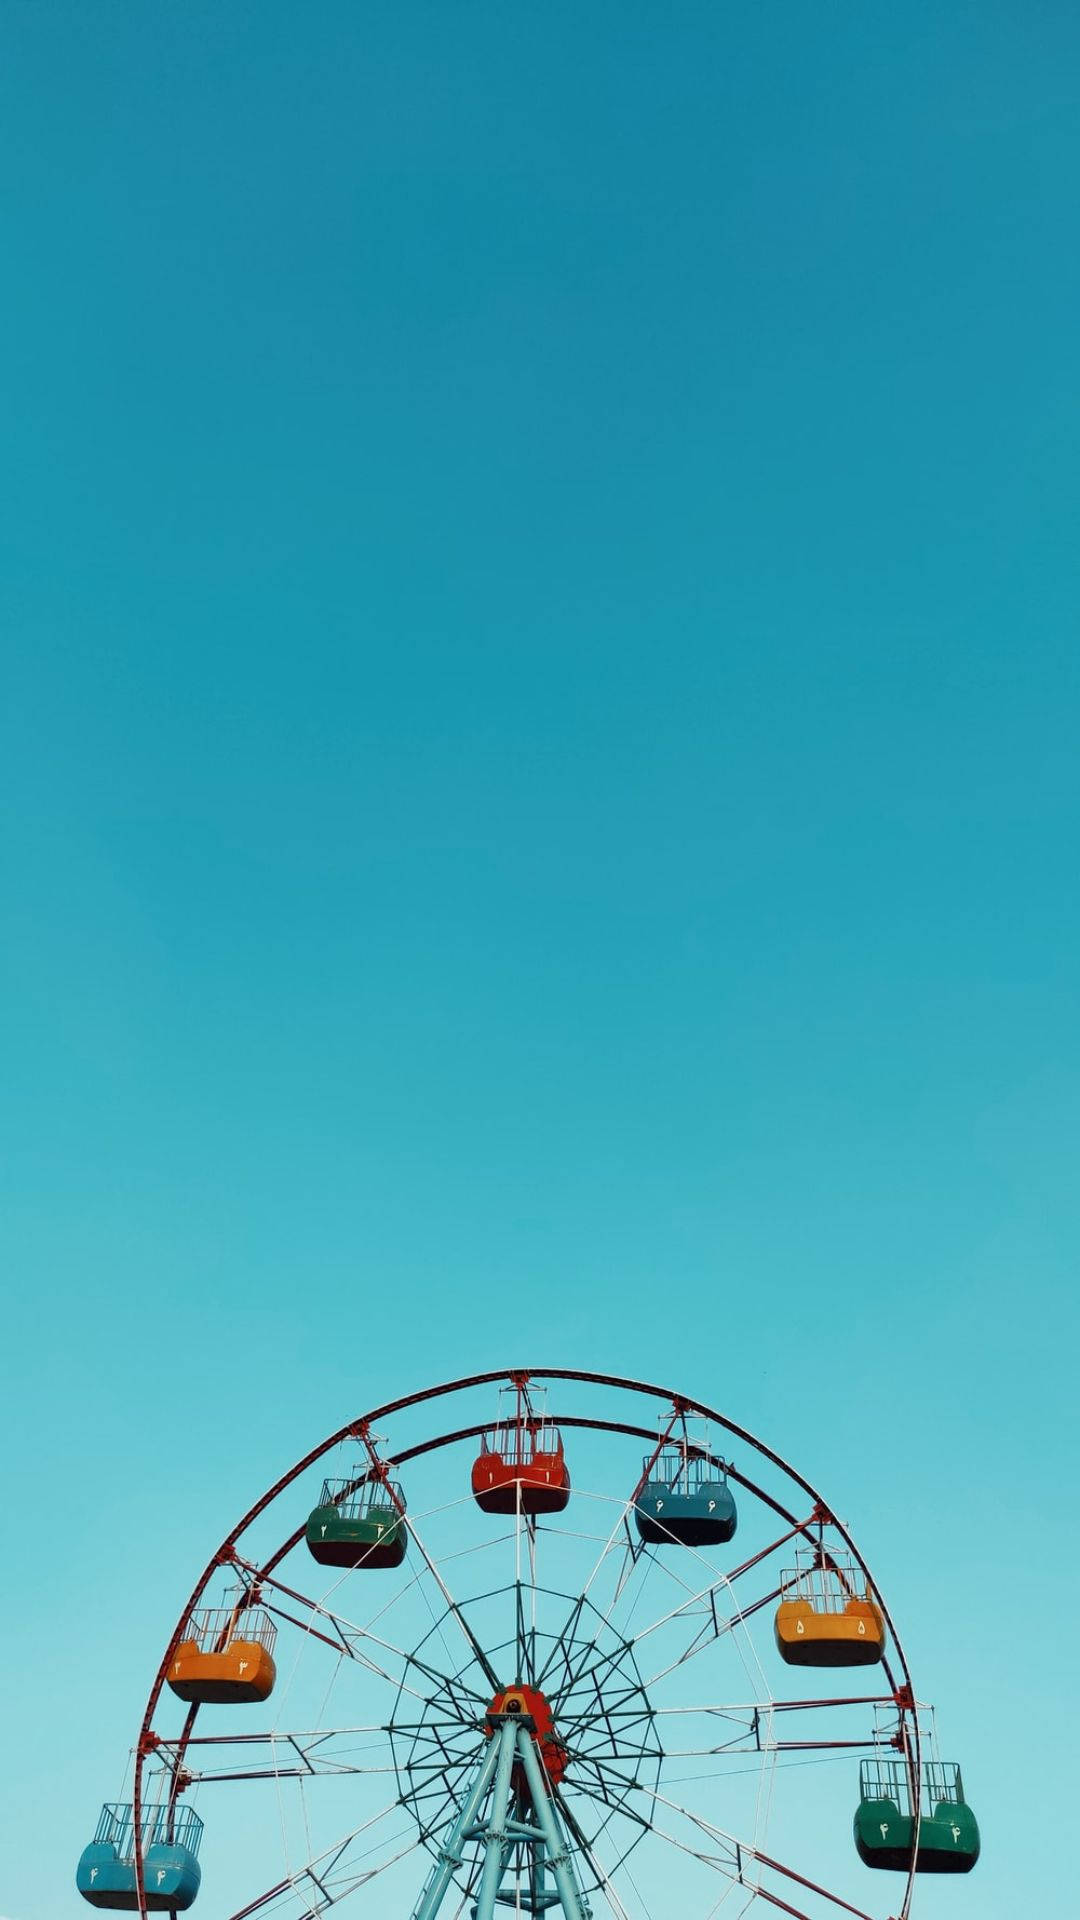 Ferris Wheel On Baby Blue Sky Background